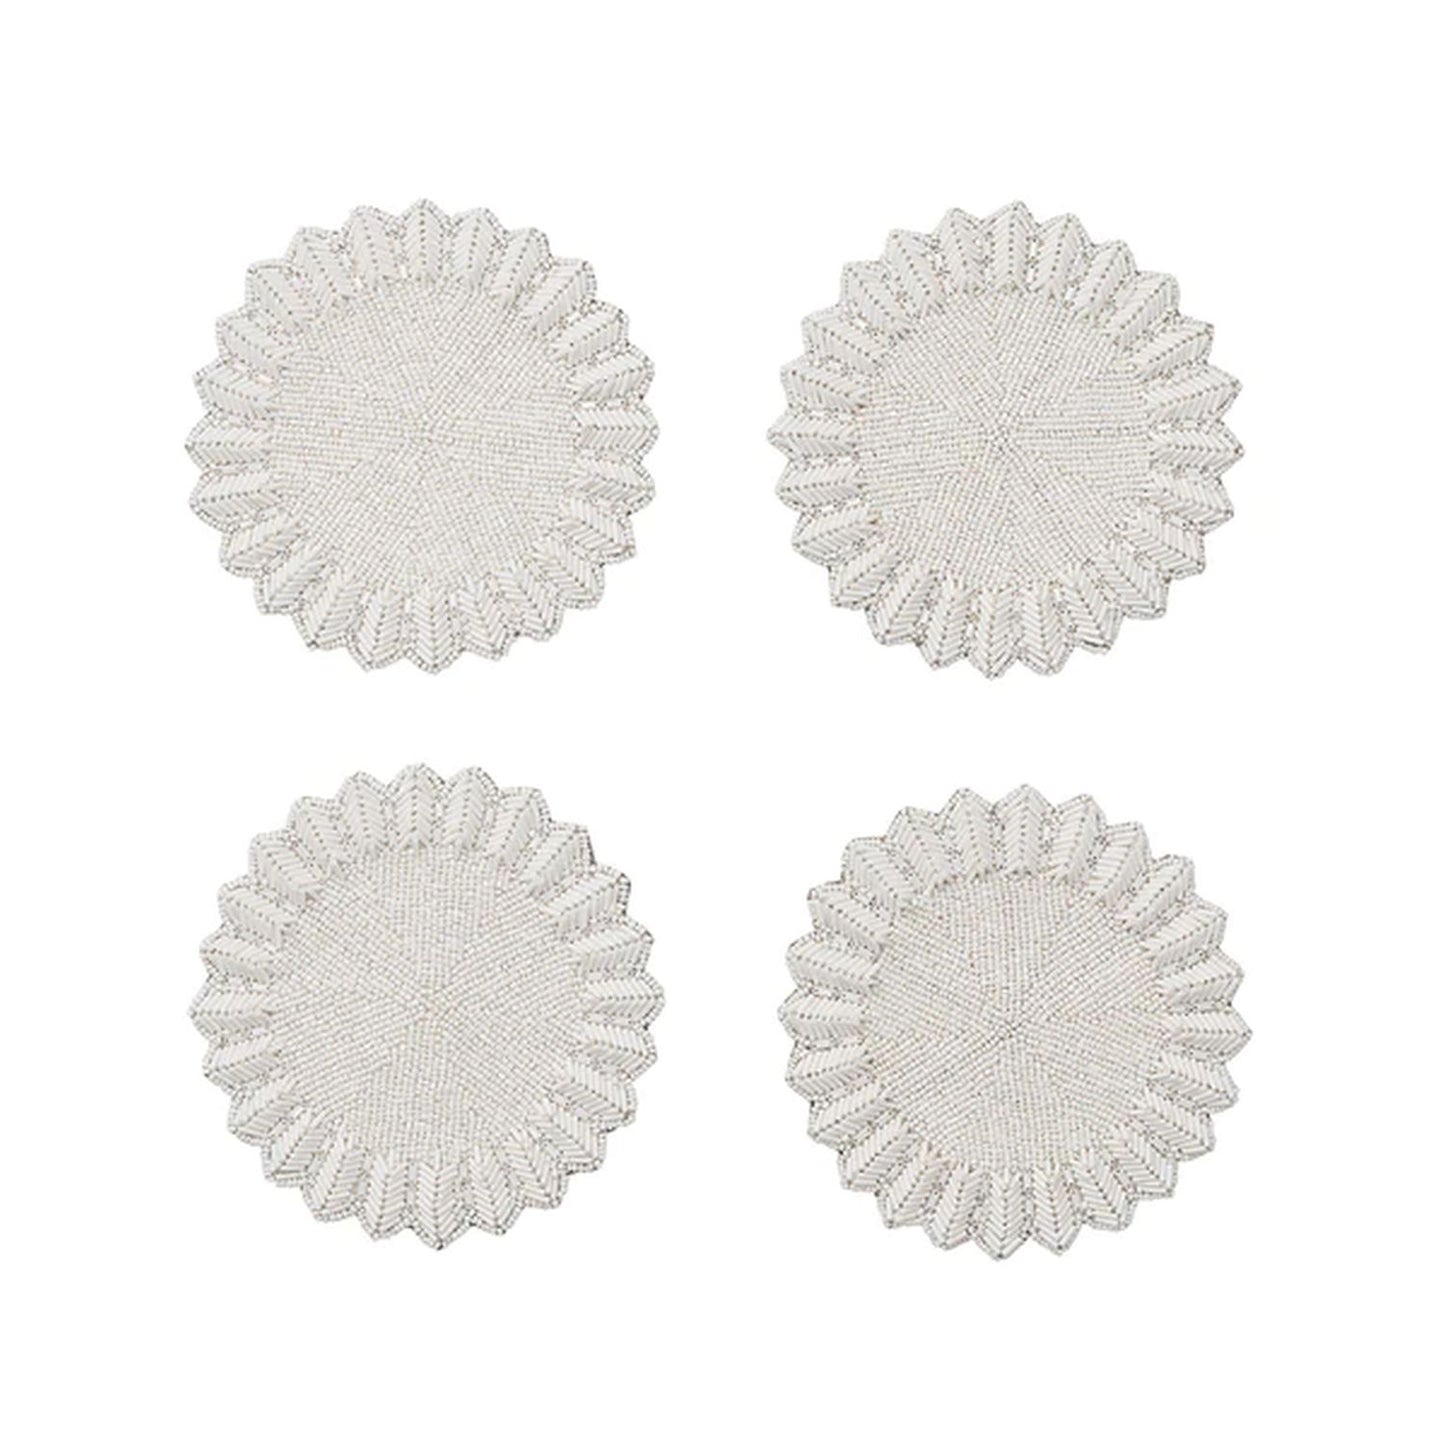 Kim Seybert Lumina Coasters in White, Set of 4 in a Gift Bag